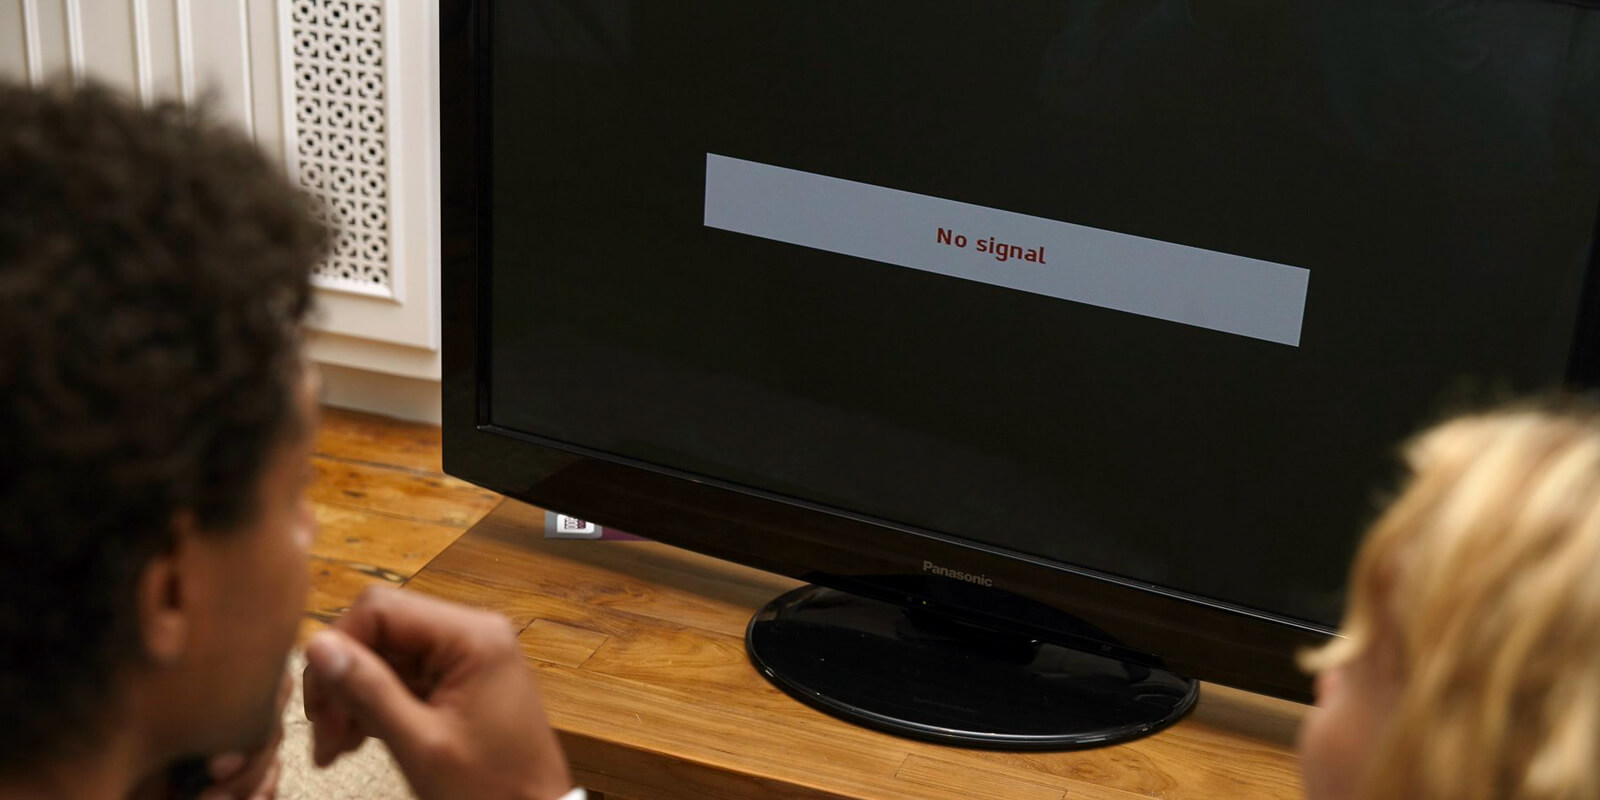 TV has no signal on its screen TV New York | TUSA